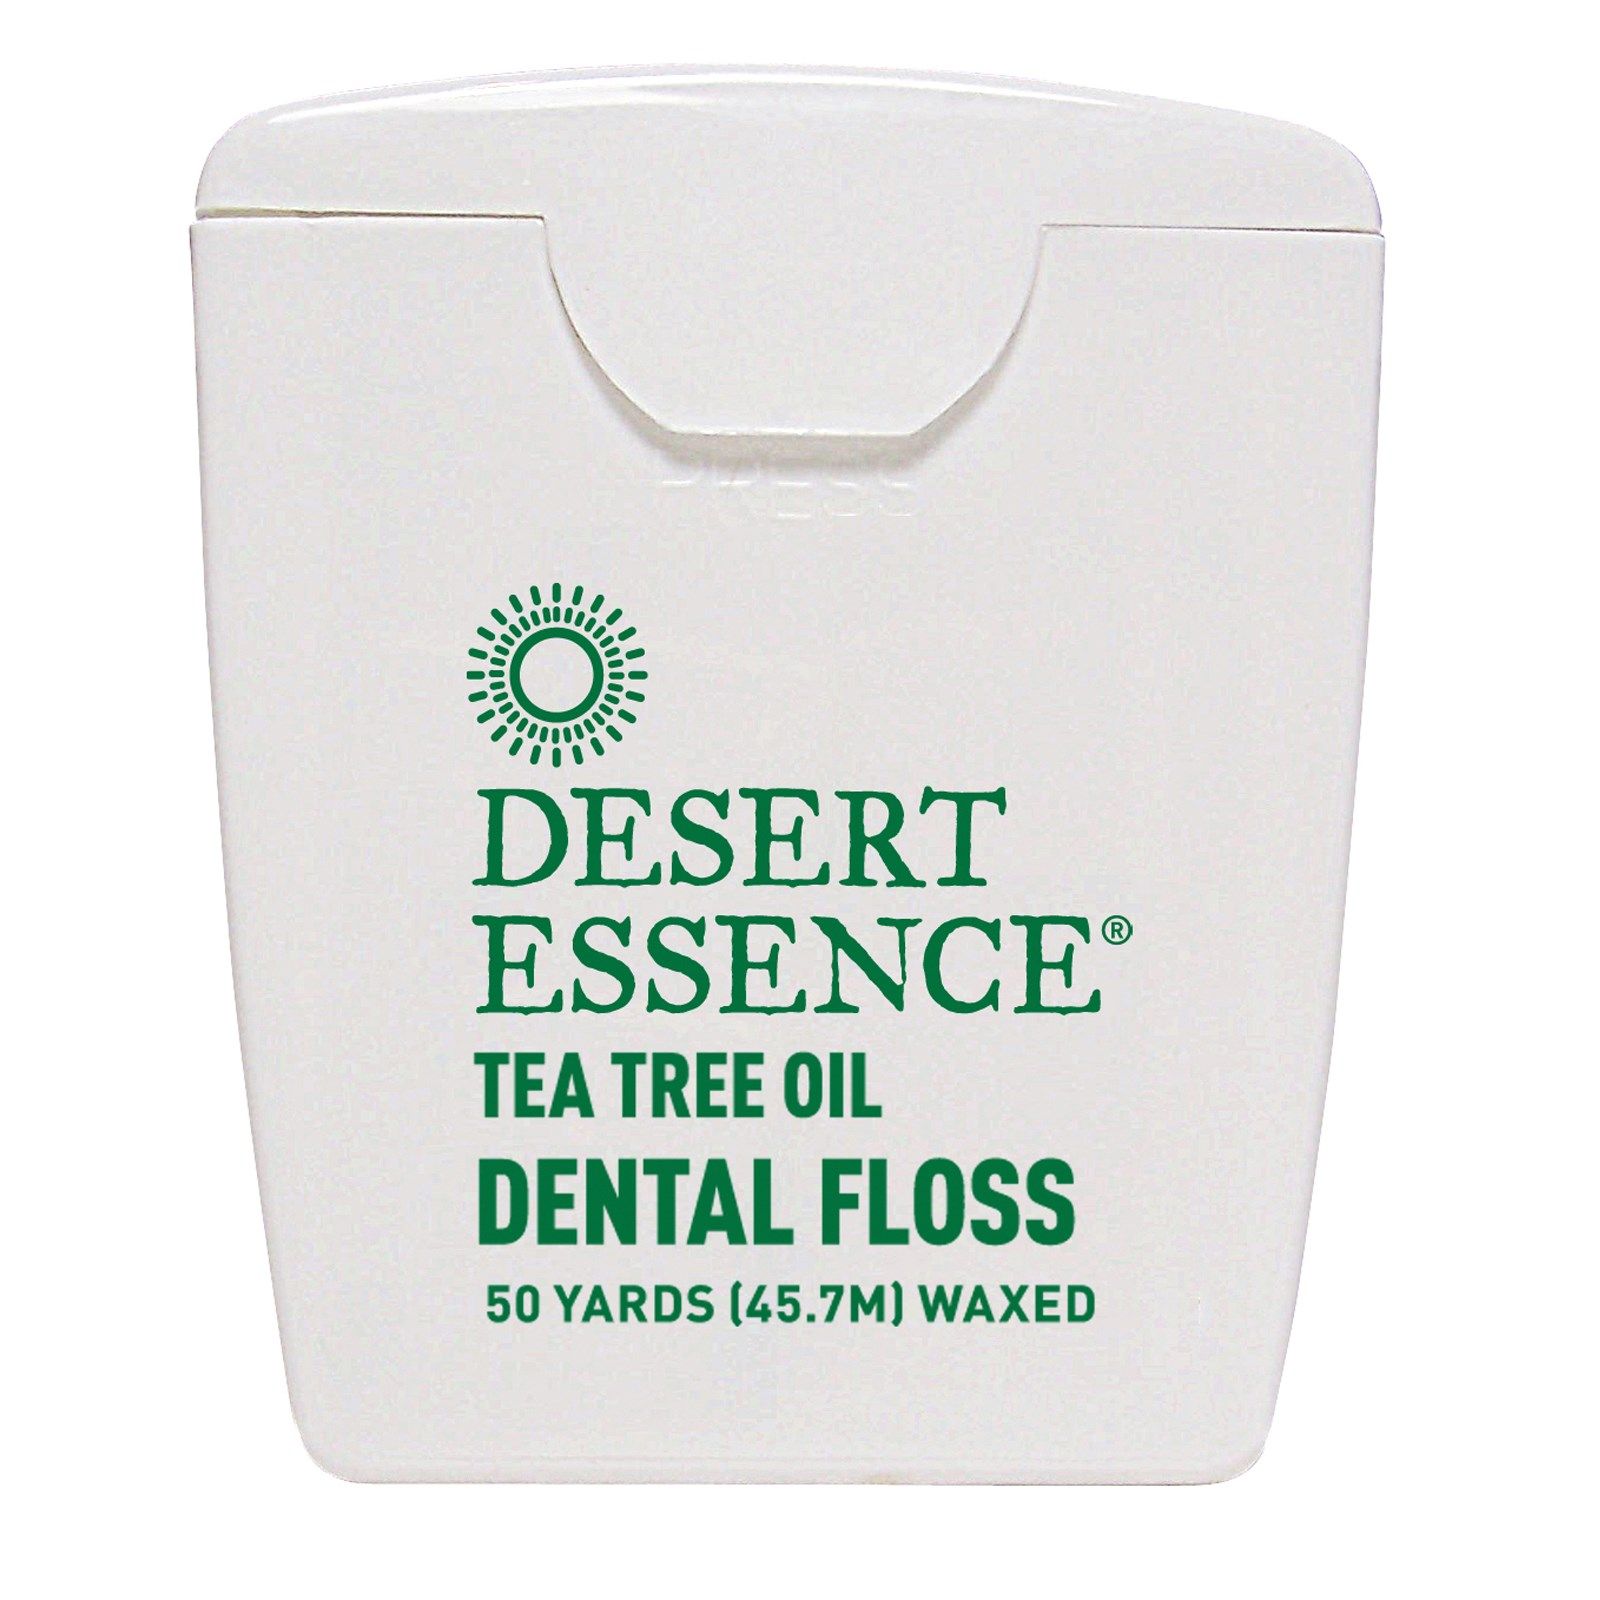 Desert Essence Tea Tree Dental Floss 45.7m